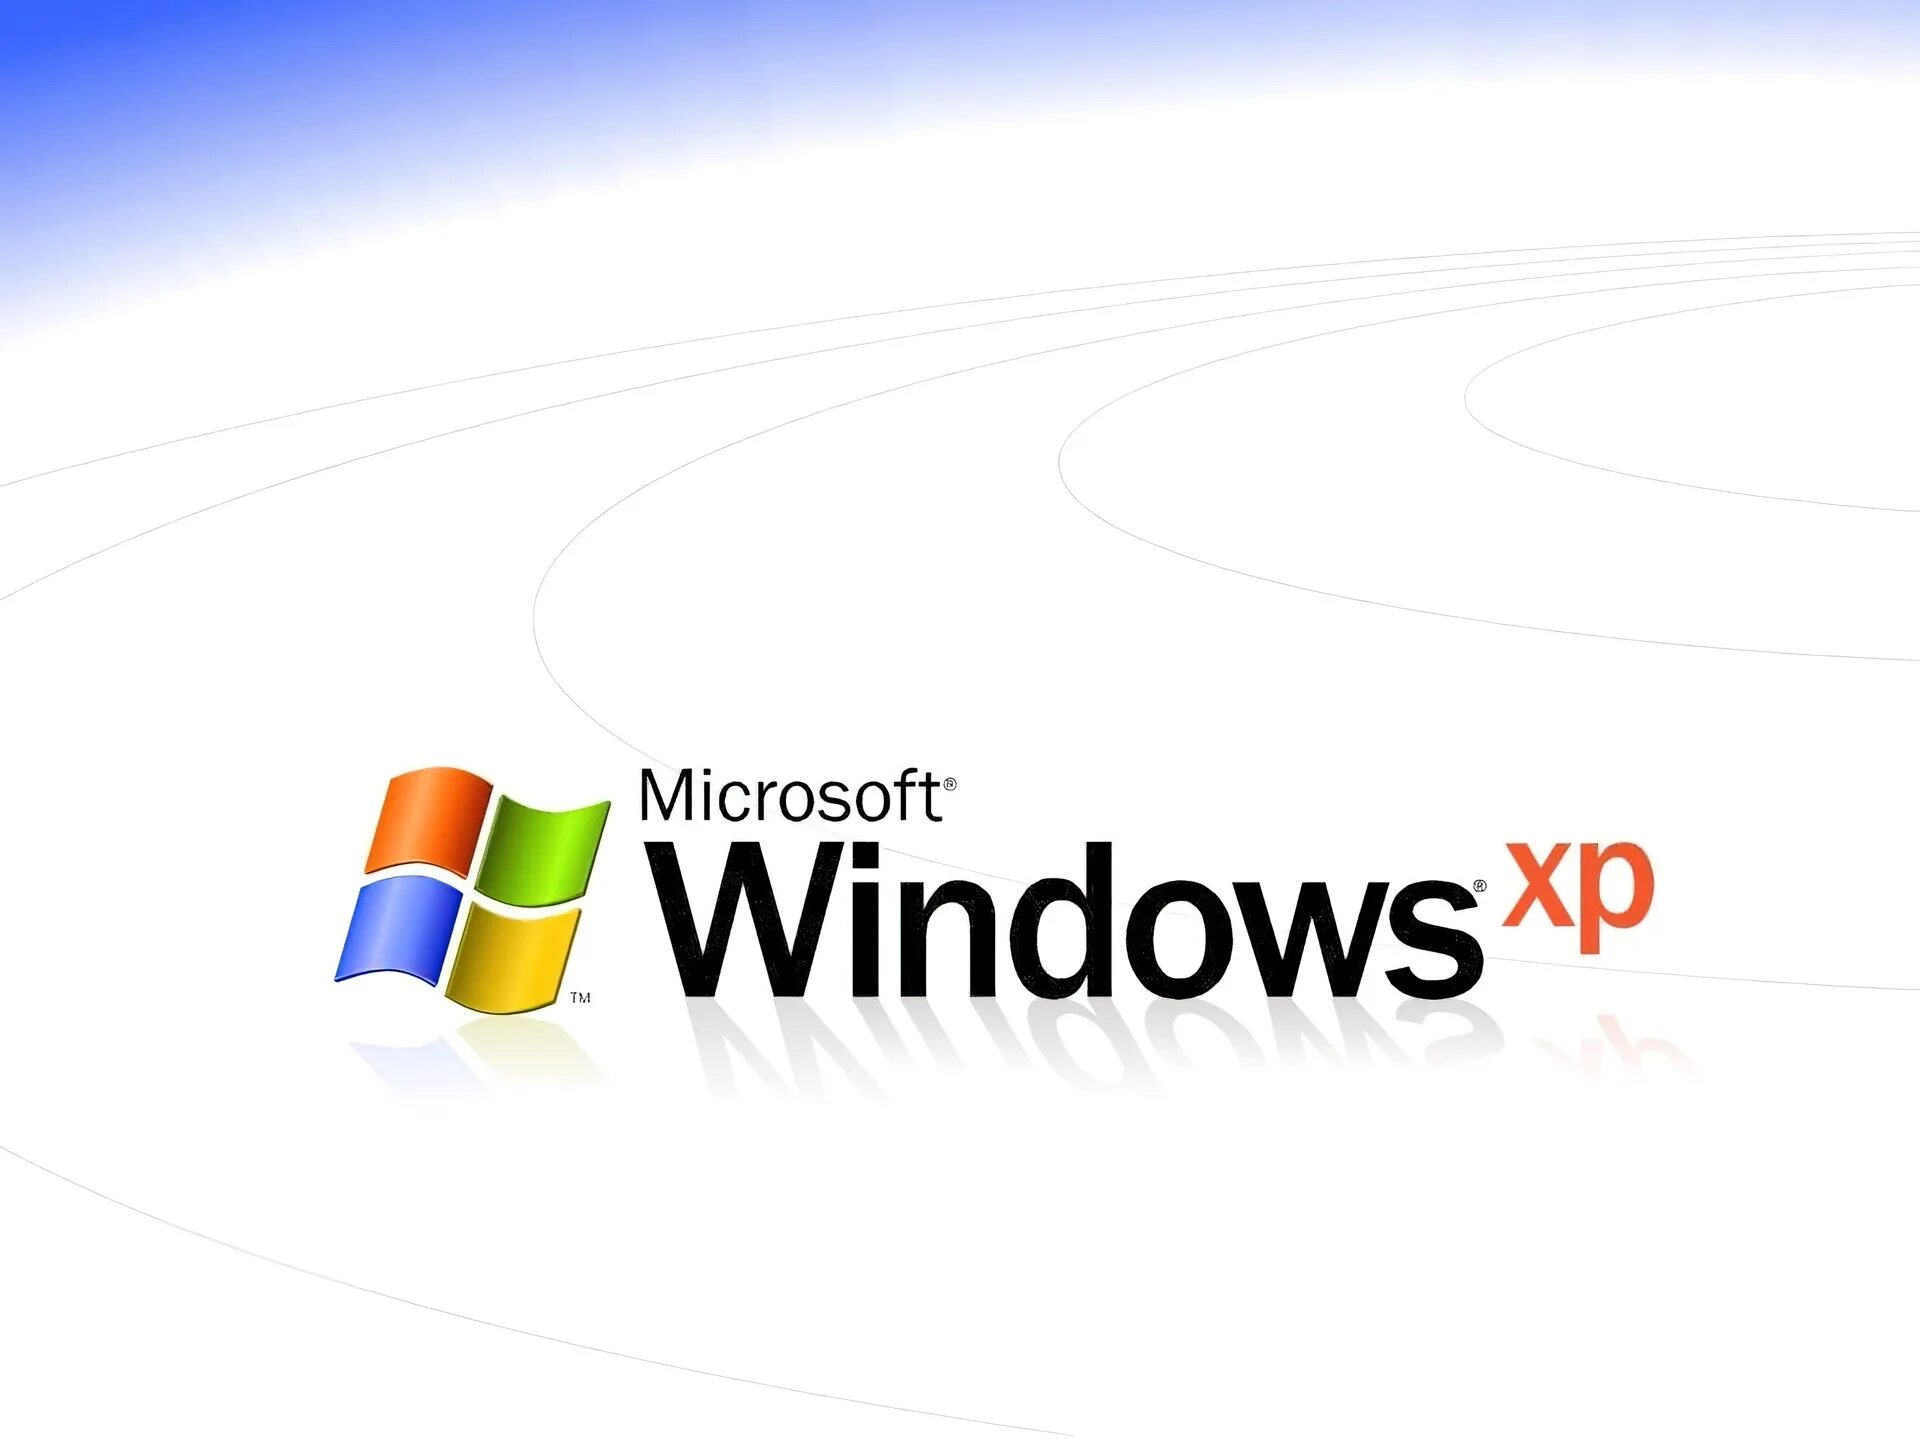 Microsoft ОС Windows XP. Логотип Windows. Эмблема Windows XP. Логотип Microsoft Windows XP.